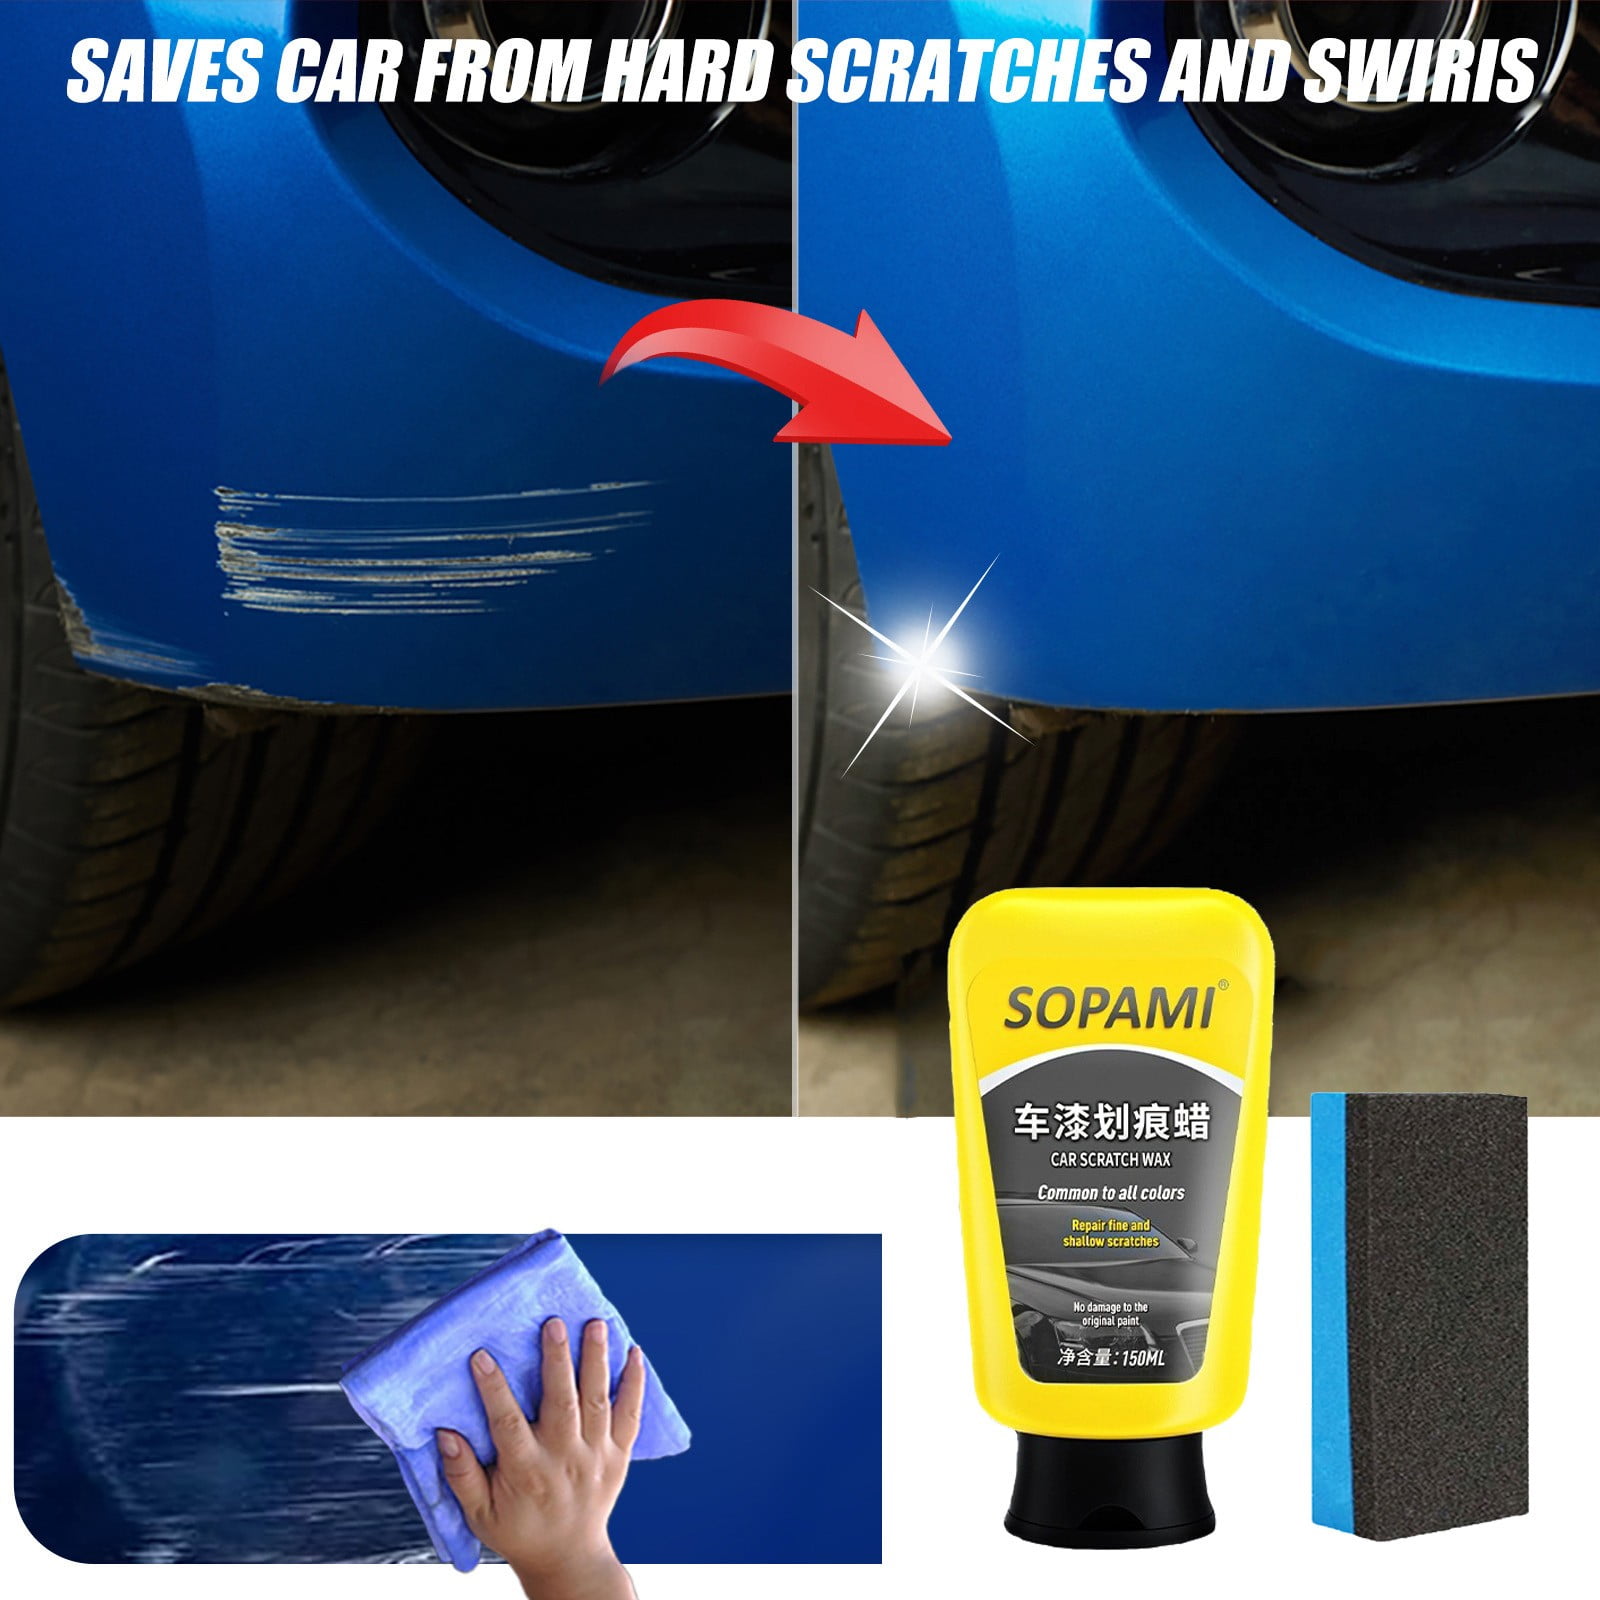  Sopami Car Spray,Sopami Car Coating Spray,3 in 1 High  Protection Quick Nano Ceramic Car Coating Agent Spray,High Protection Quick  Car Coating Spray(500ml) (2Pcs) : Beauty & Personal Care